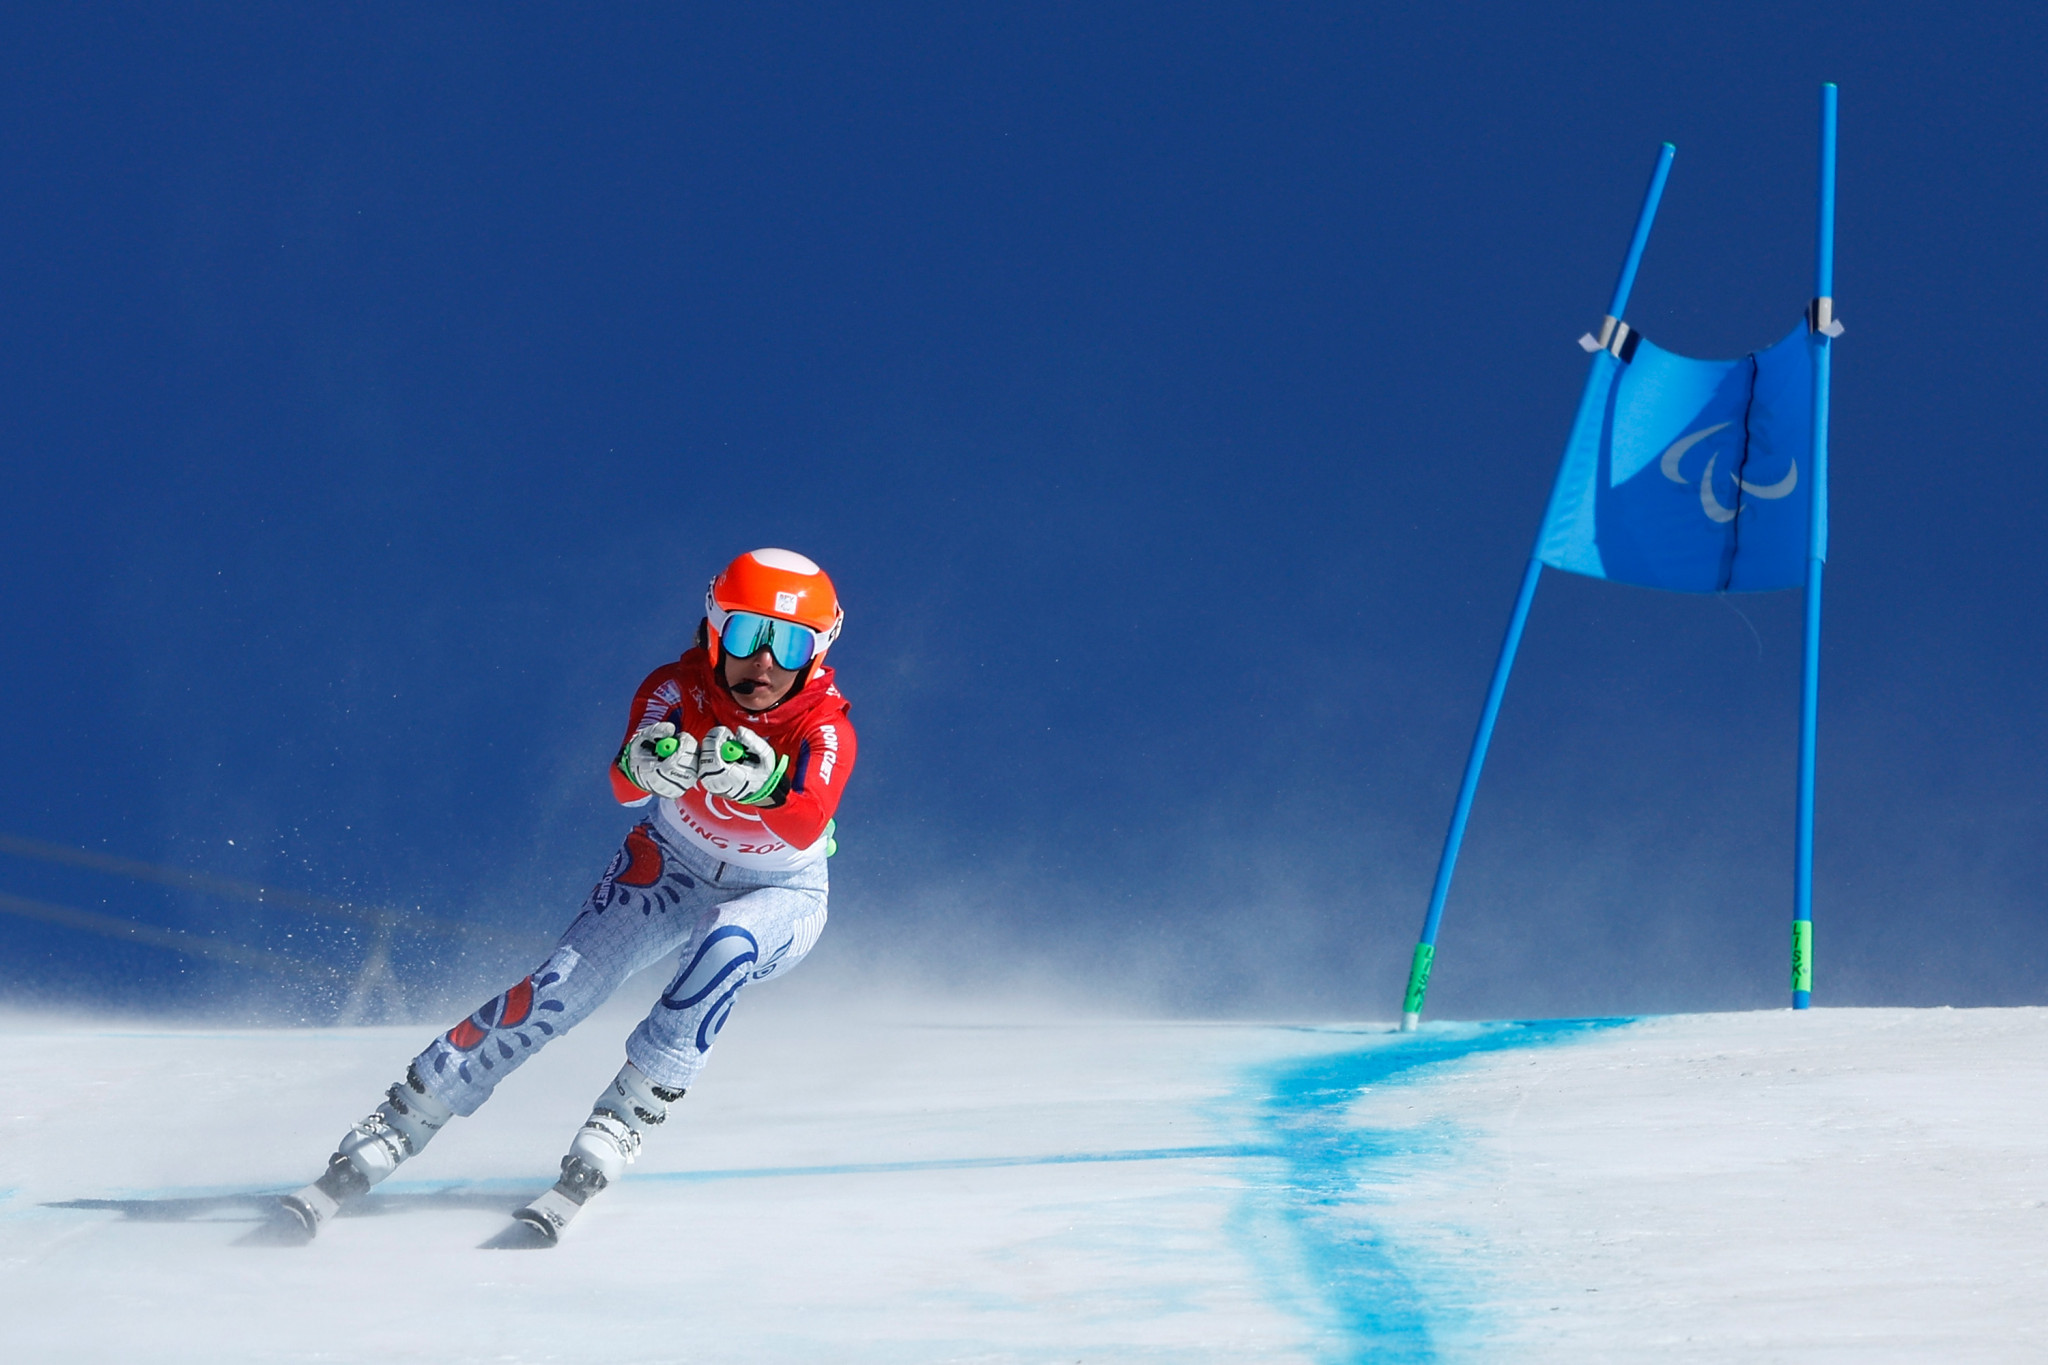 Slovakia's Farkašová wins first gold medal of Beijing 2022 Winter Paralympics